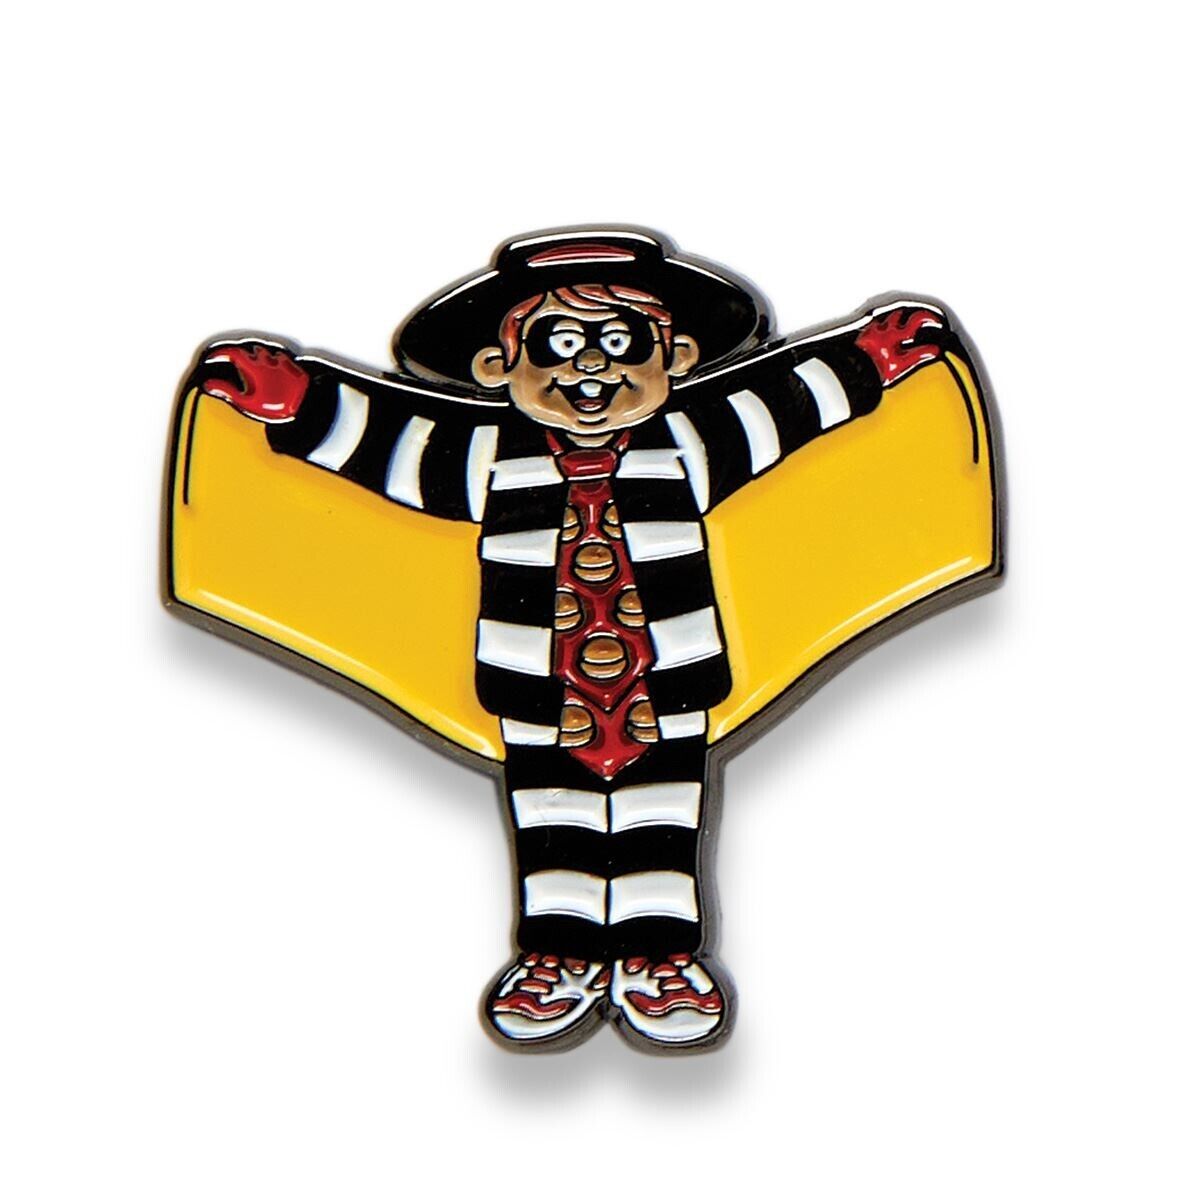 McDonalds Hamburglar Character Lapel Pin - NEW